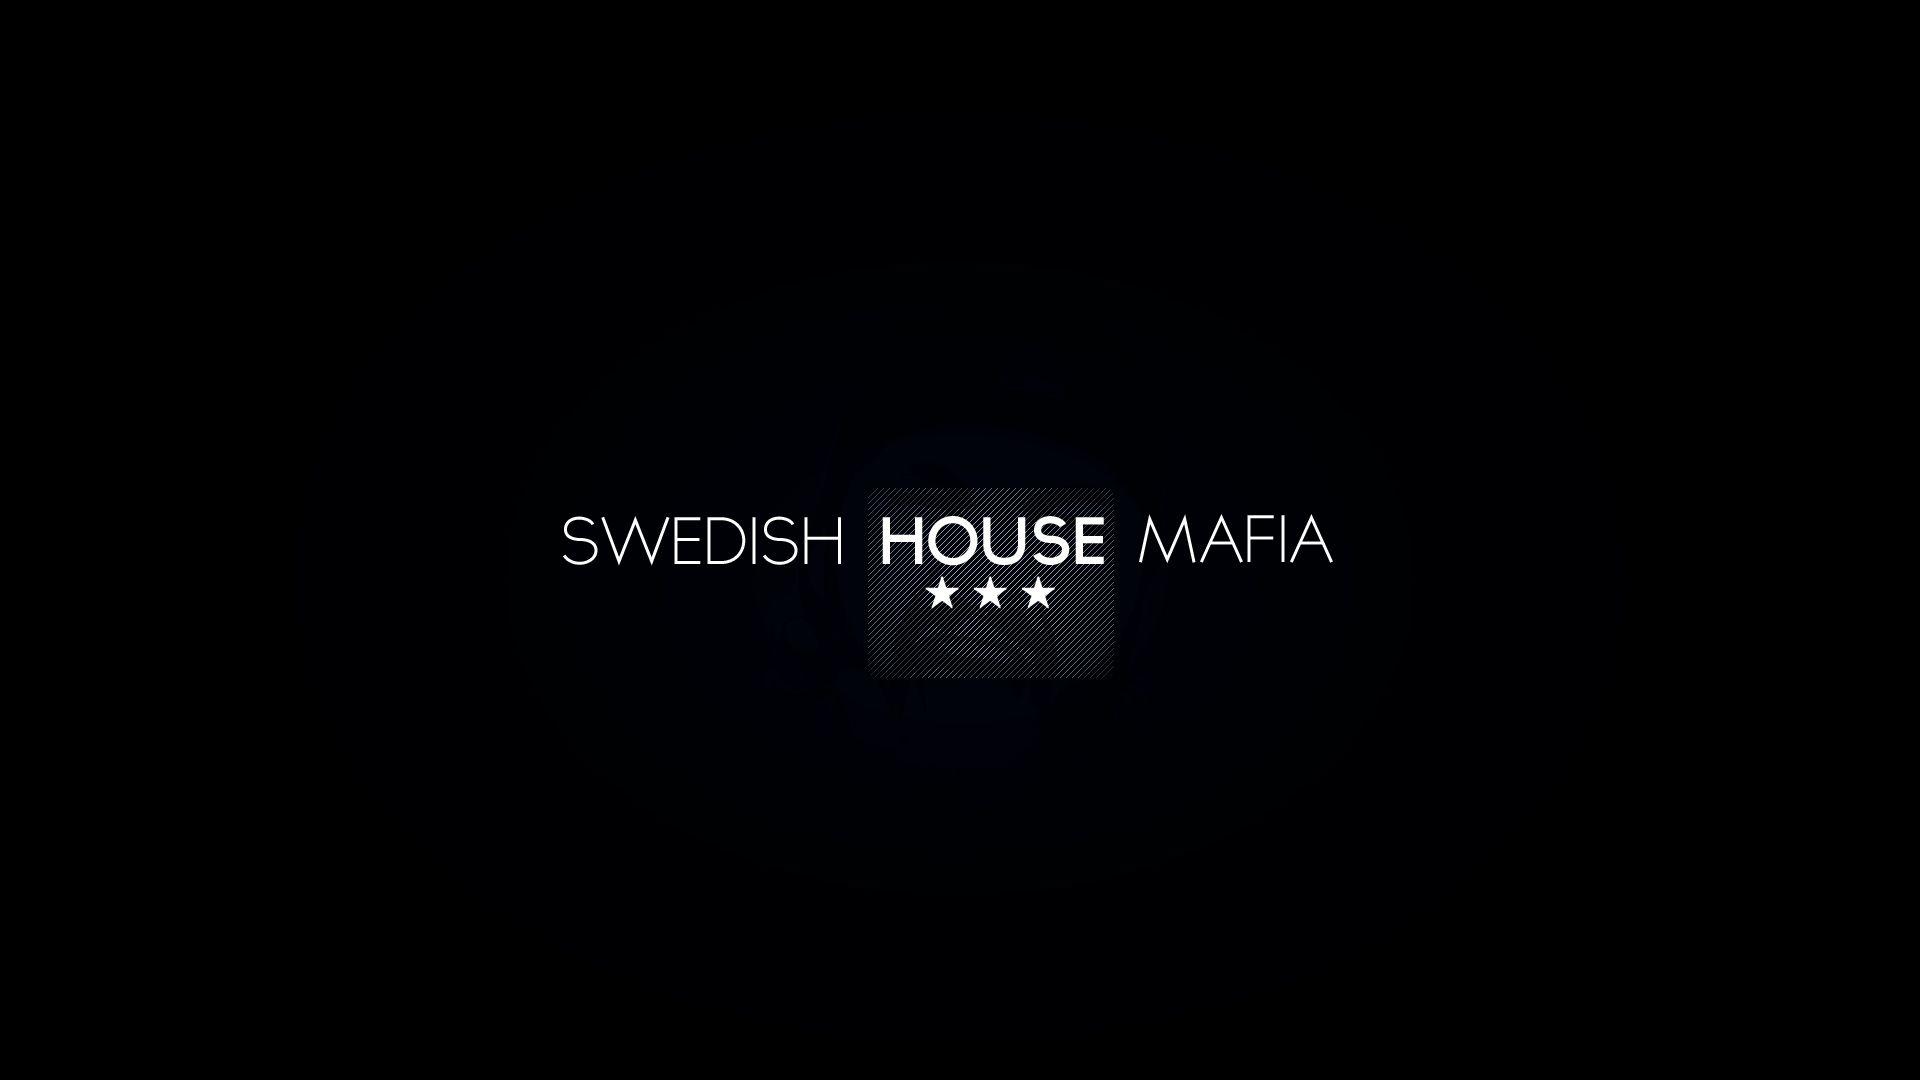 Swedish House Mafia Wallpaper, Amazing Swedish House Mafia